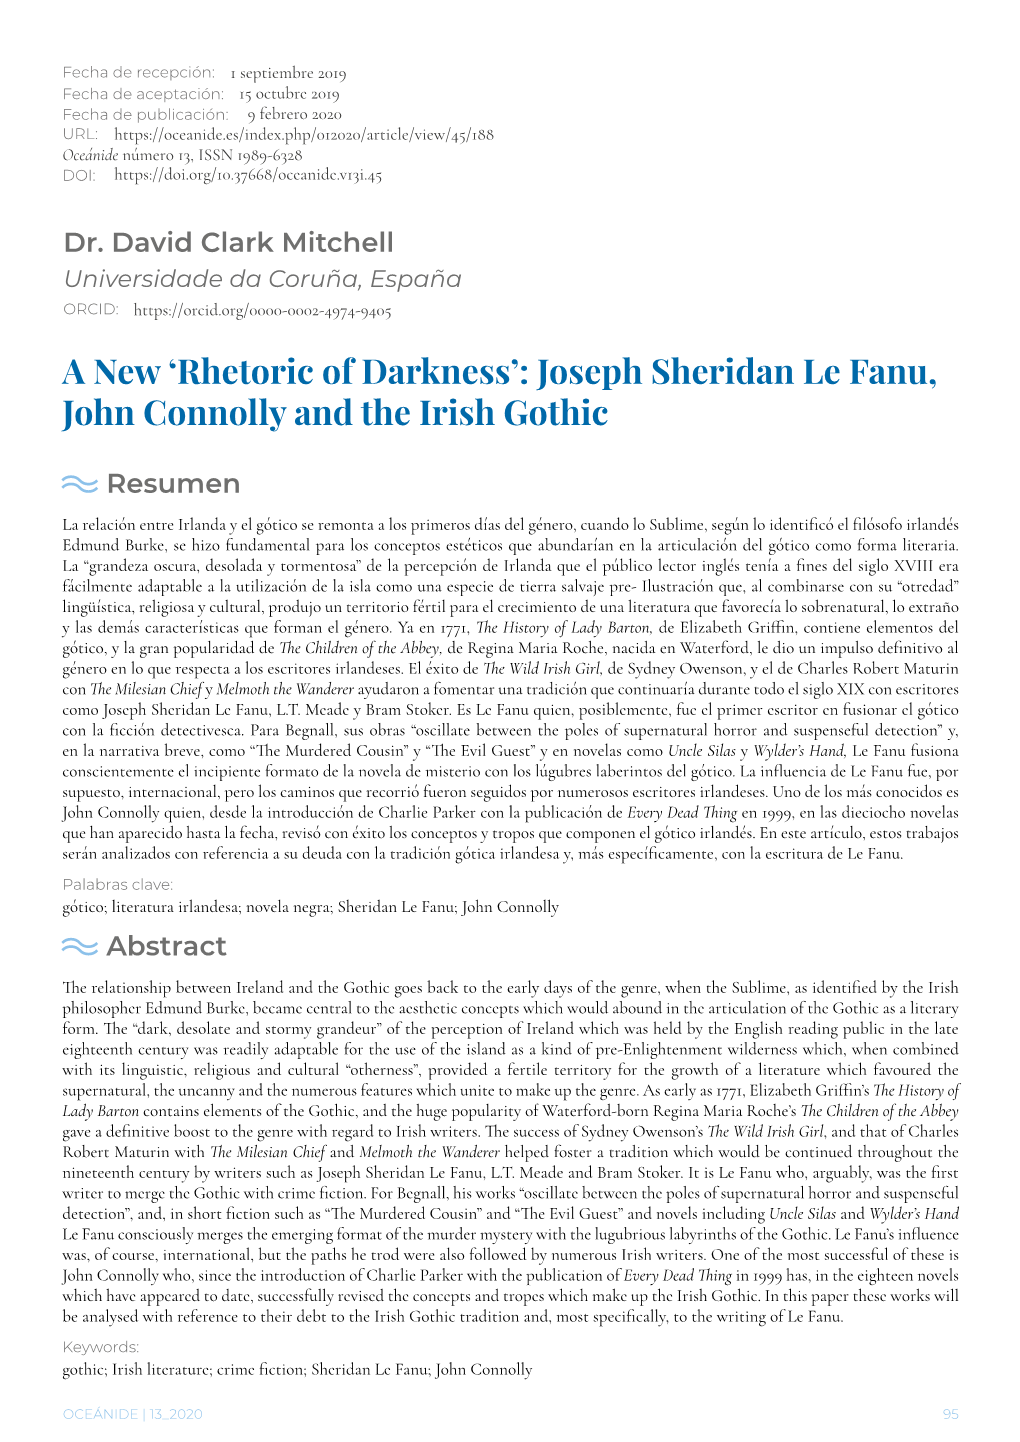 Joseph Sheridan Le Fanu, John Connolly and the Irish Gothic